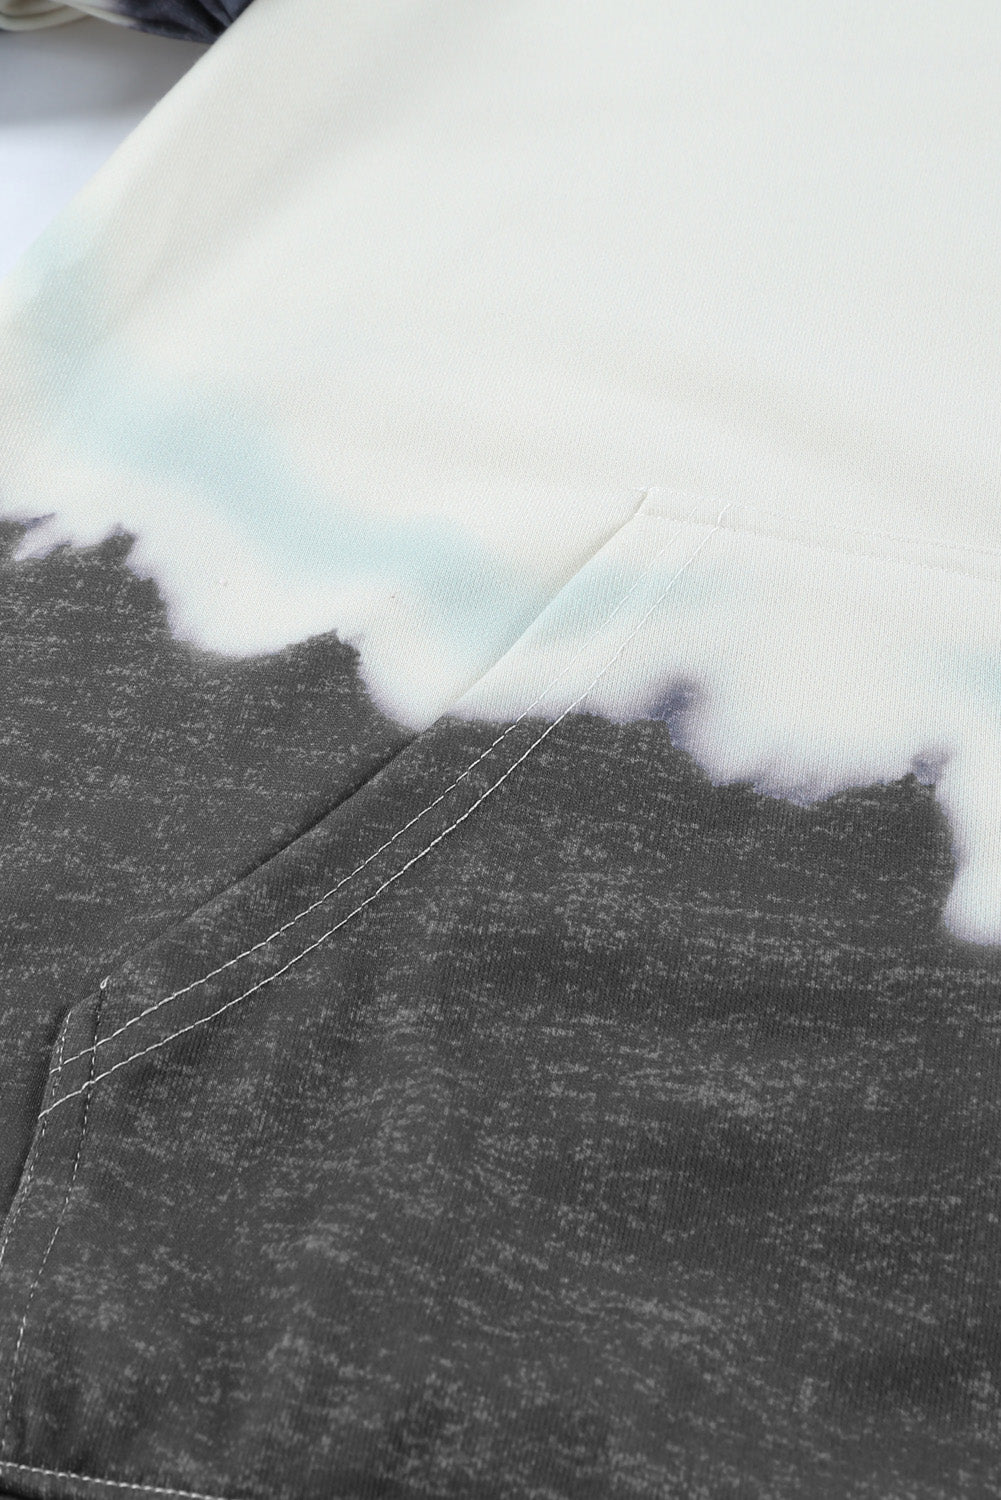 Gray Hooded Tie Dye Print Pocket Casual Sweatshirt Sweatshirts & Hoodies JT's Designer Fashion